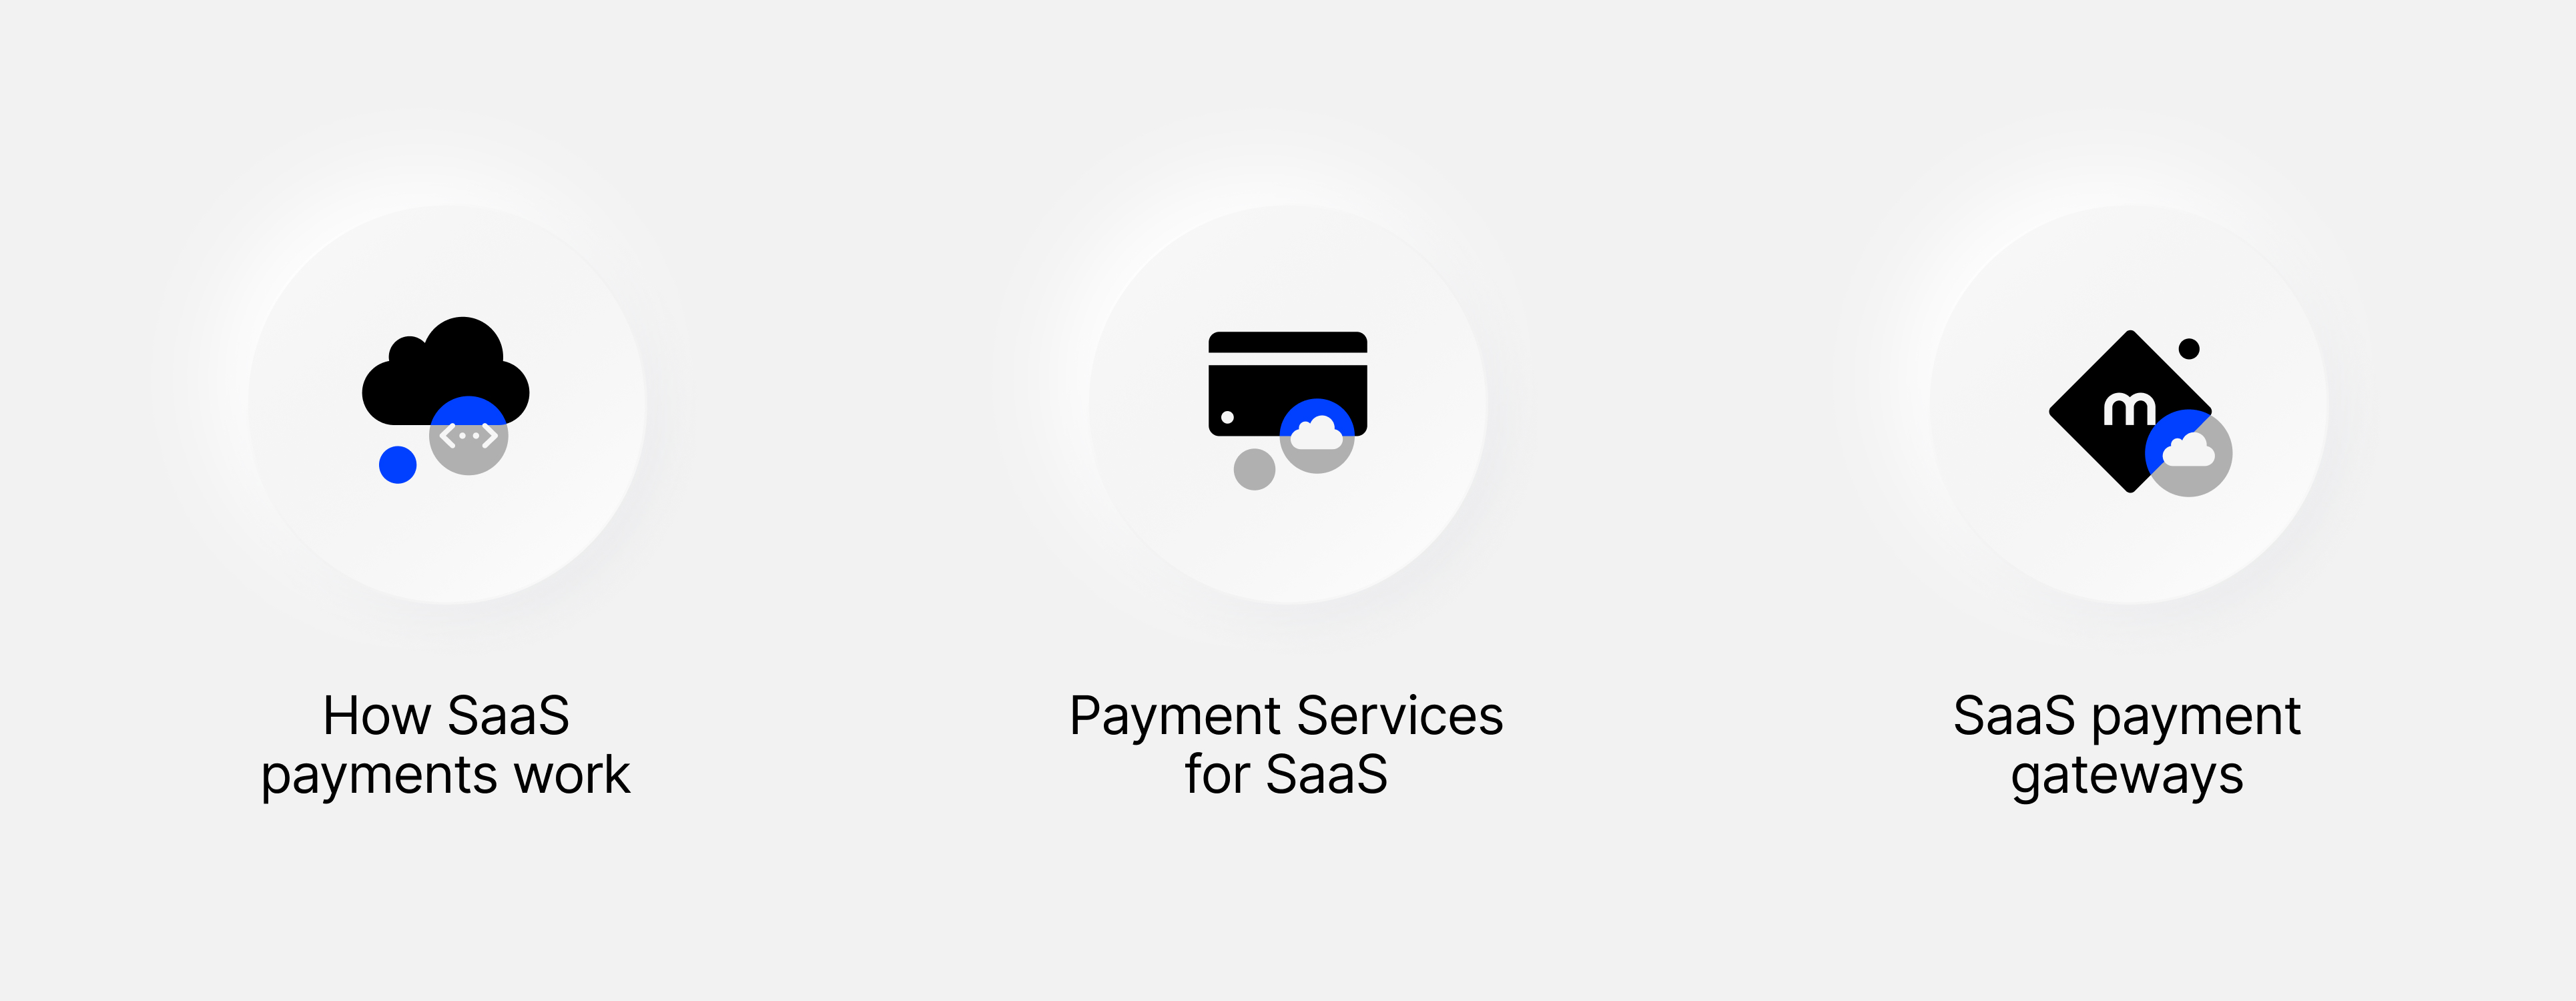 SaaS payment